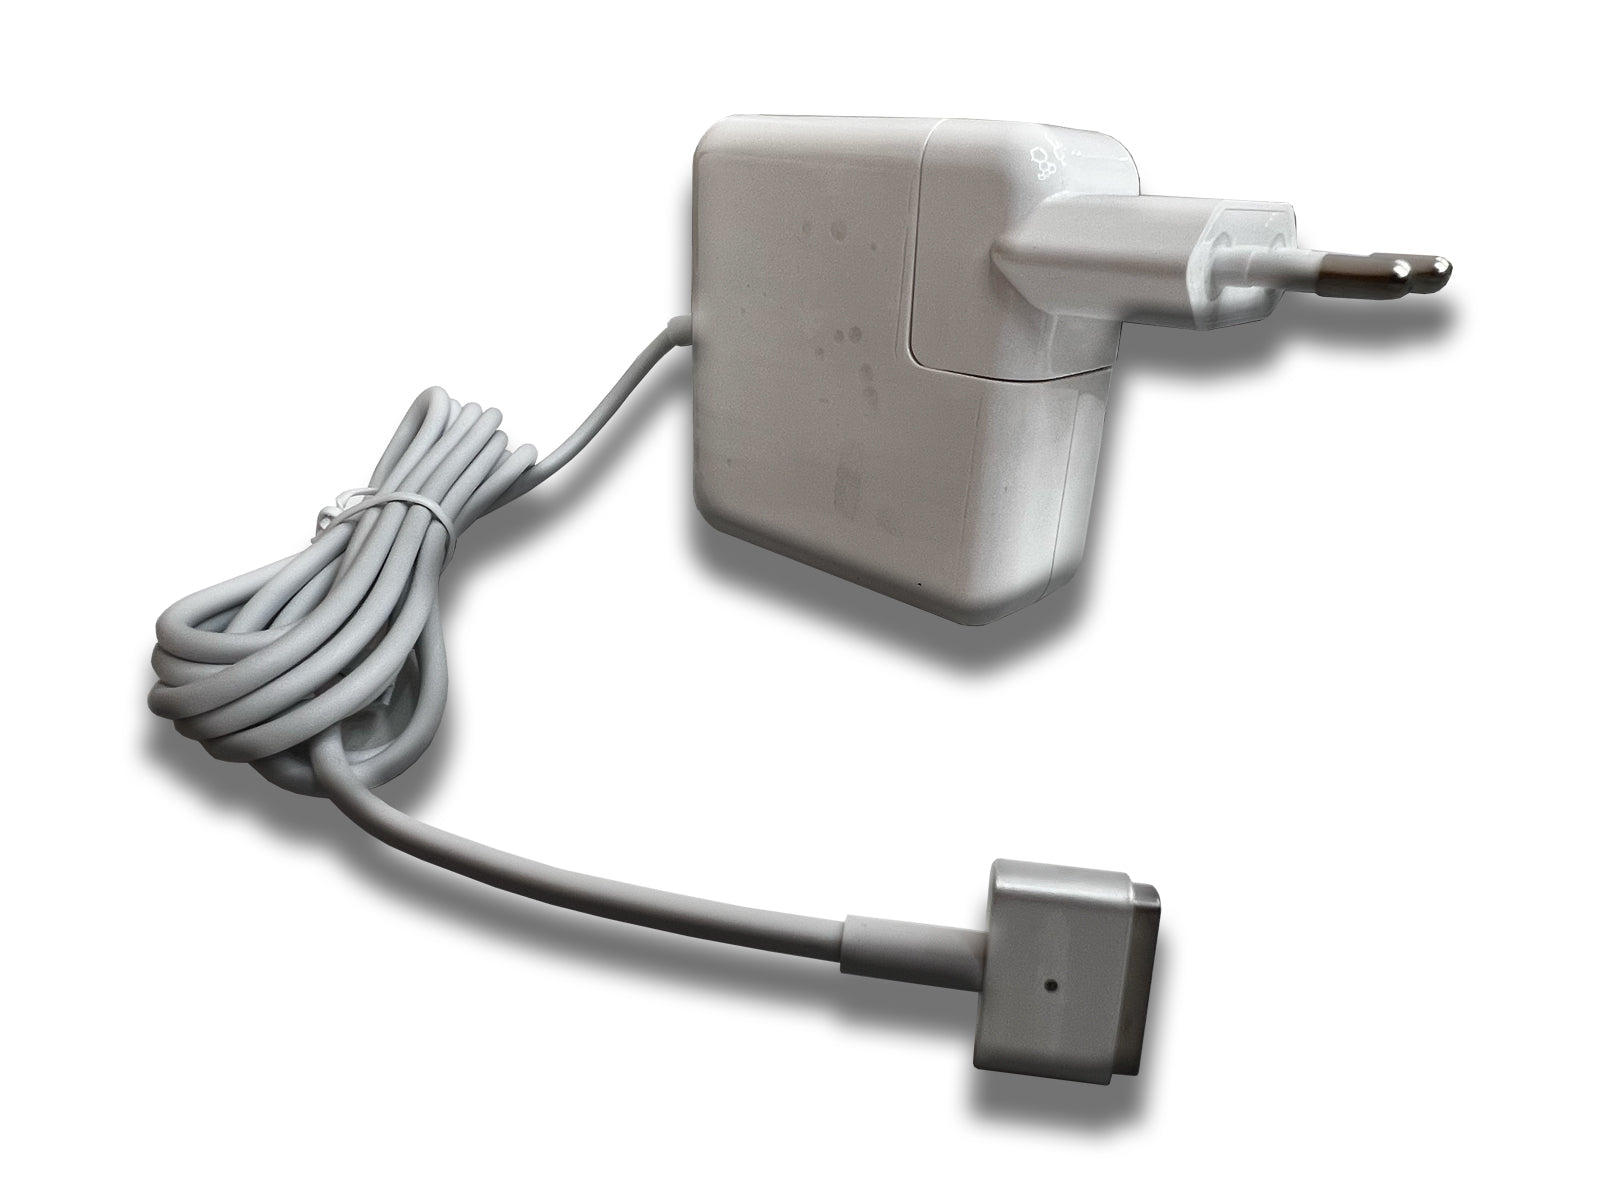 MacBook Charger With EU Plug